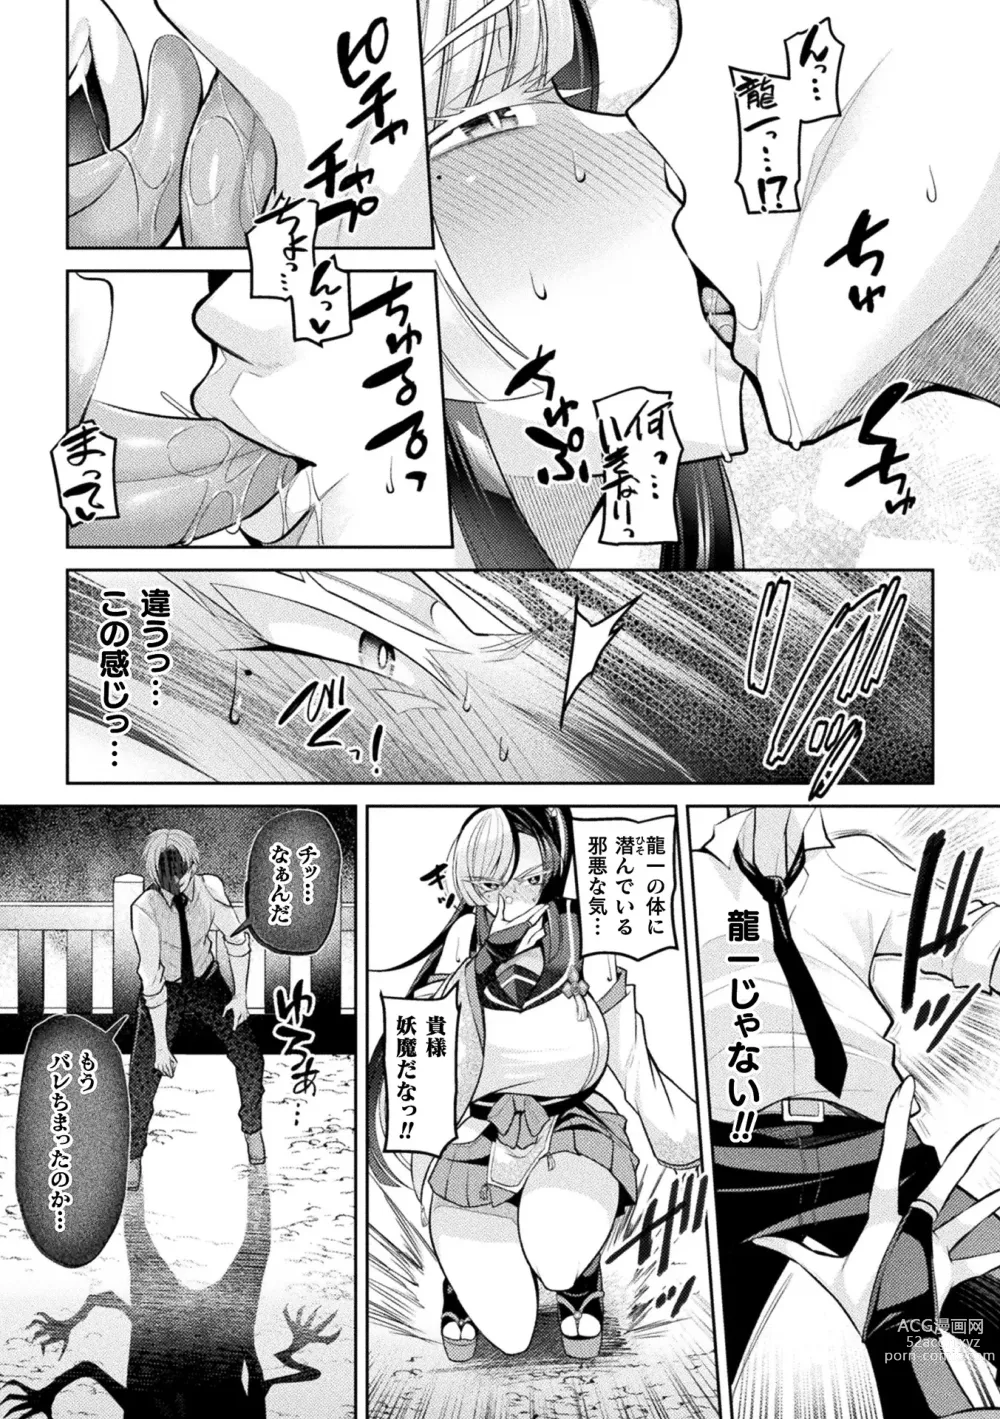 Page 7 of manga 2D Comic Magazine Akuochi Haramase Seigi no Bishoujo Akuten Jutai Vol. 2